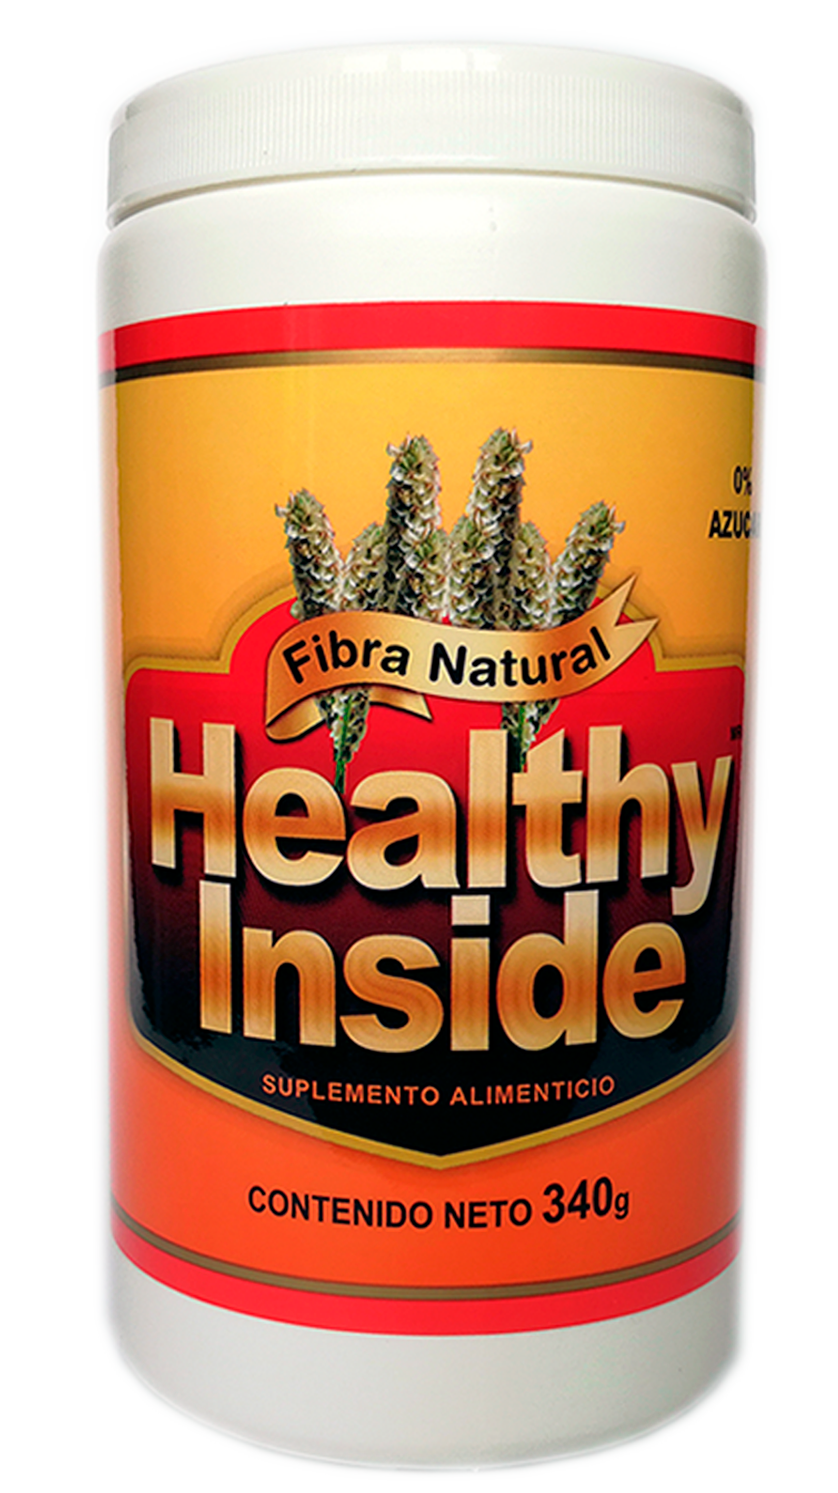 HEALTHY INSIDE FIBRA NATURAL